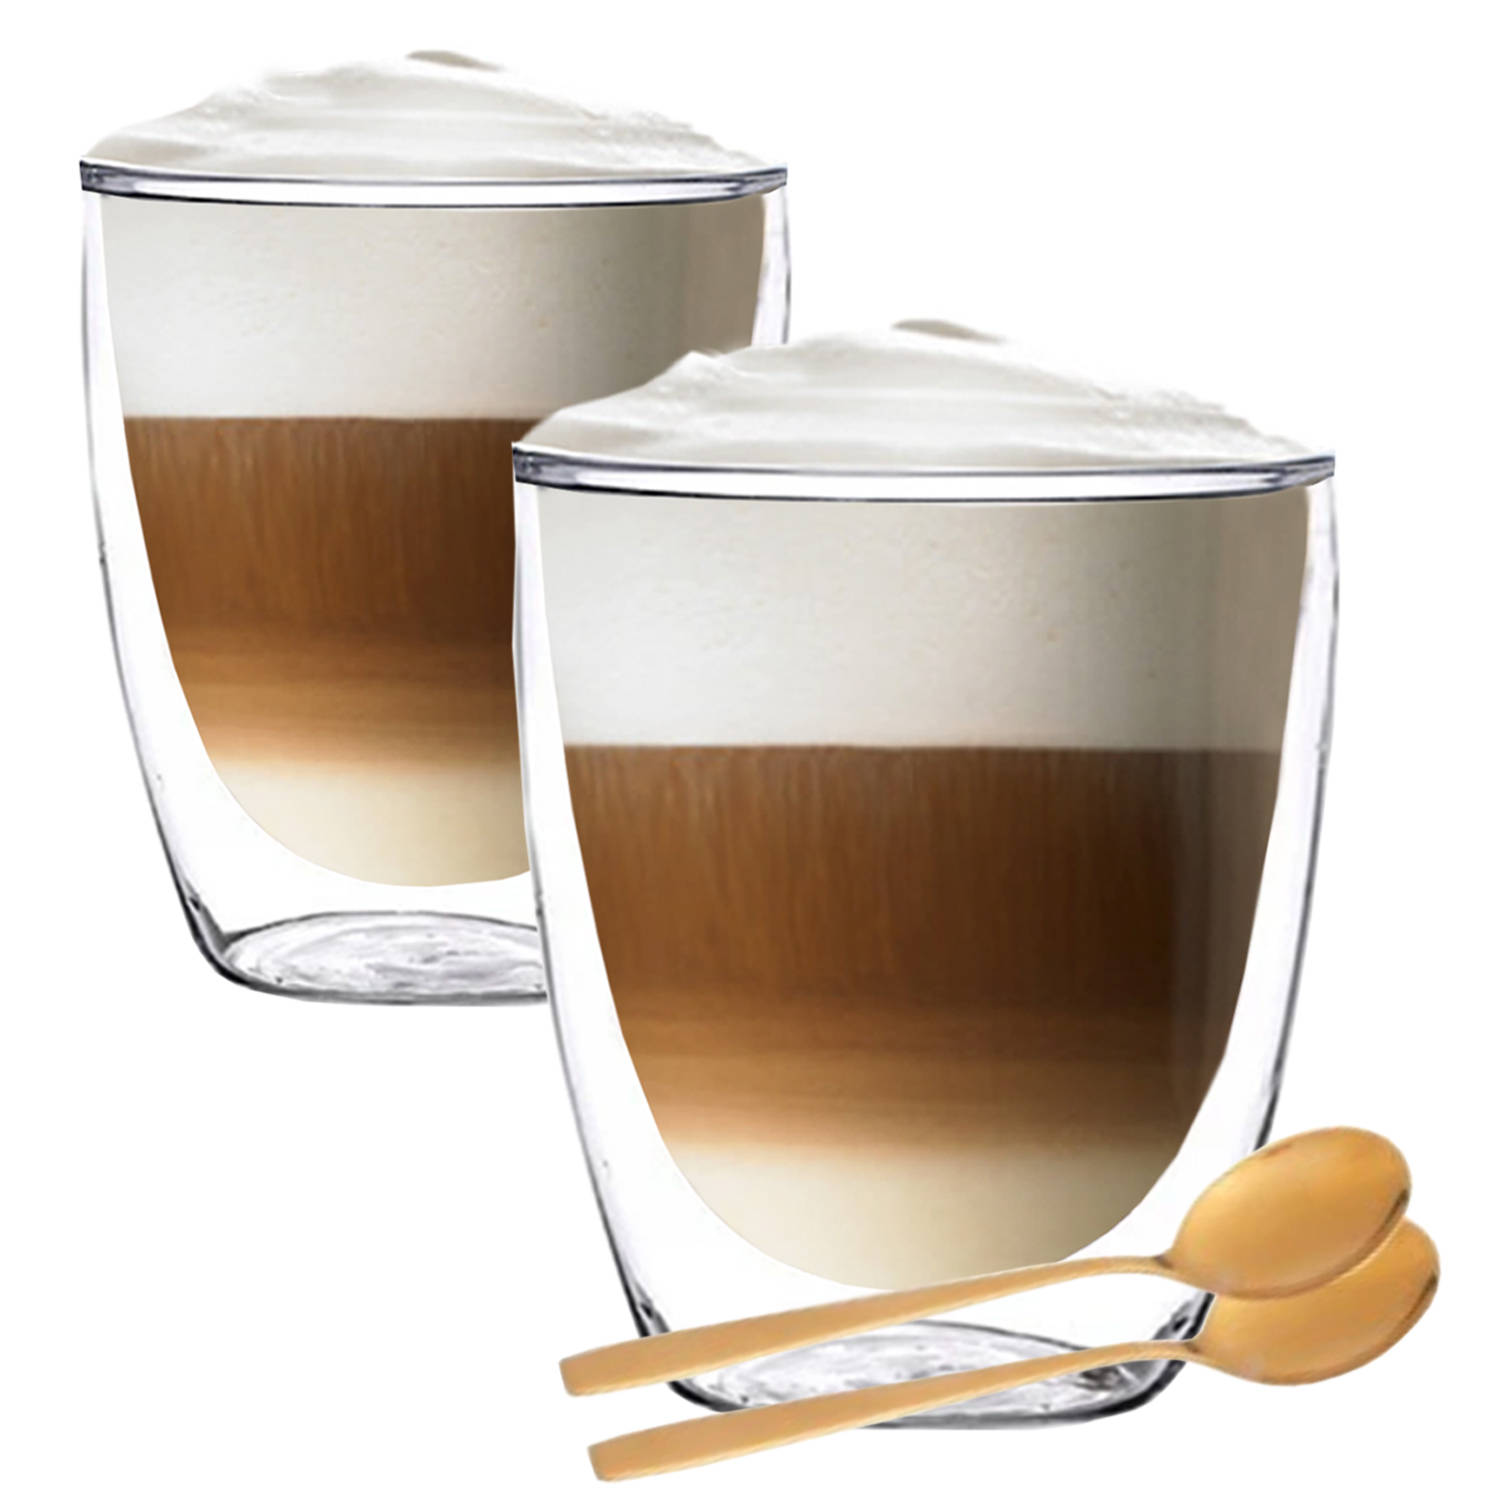 Dubbelwandige Koffieglazen - Cappuccino Glazen - Dubbelwandige Theeglazen - 300ML - 2x - Gratis Lepels